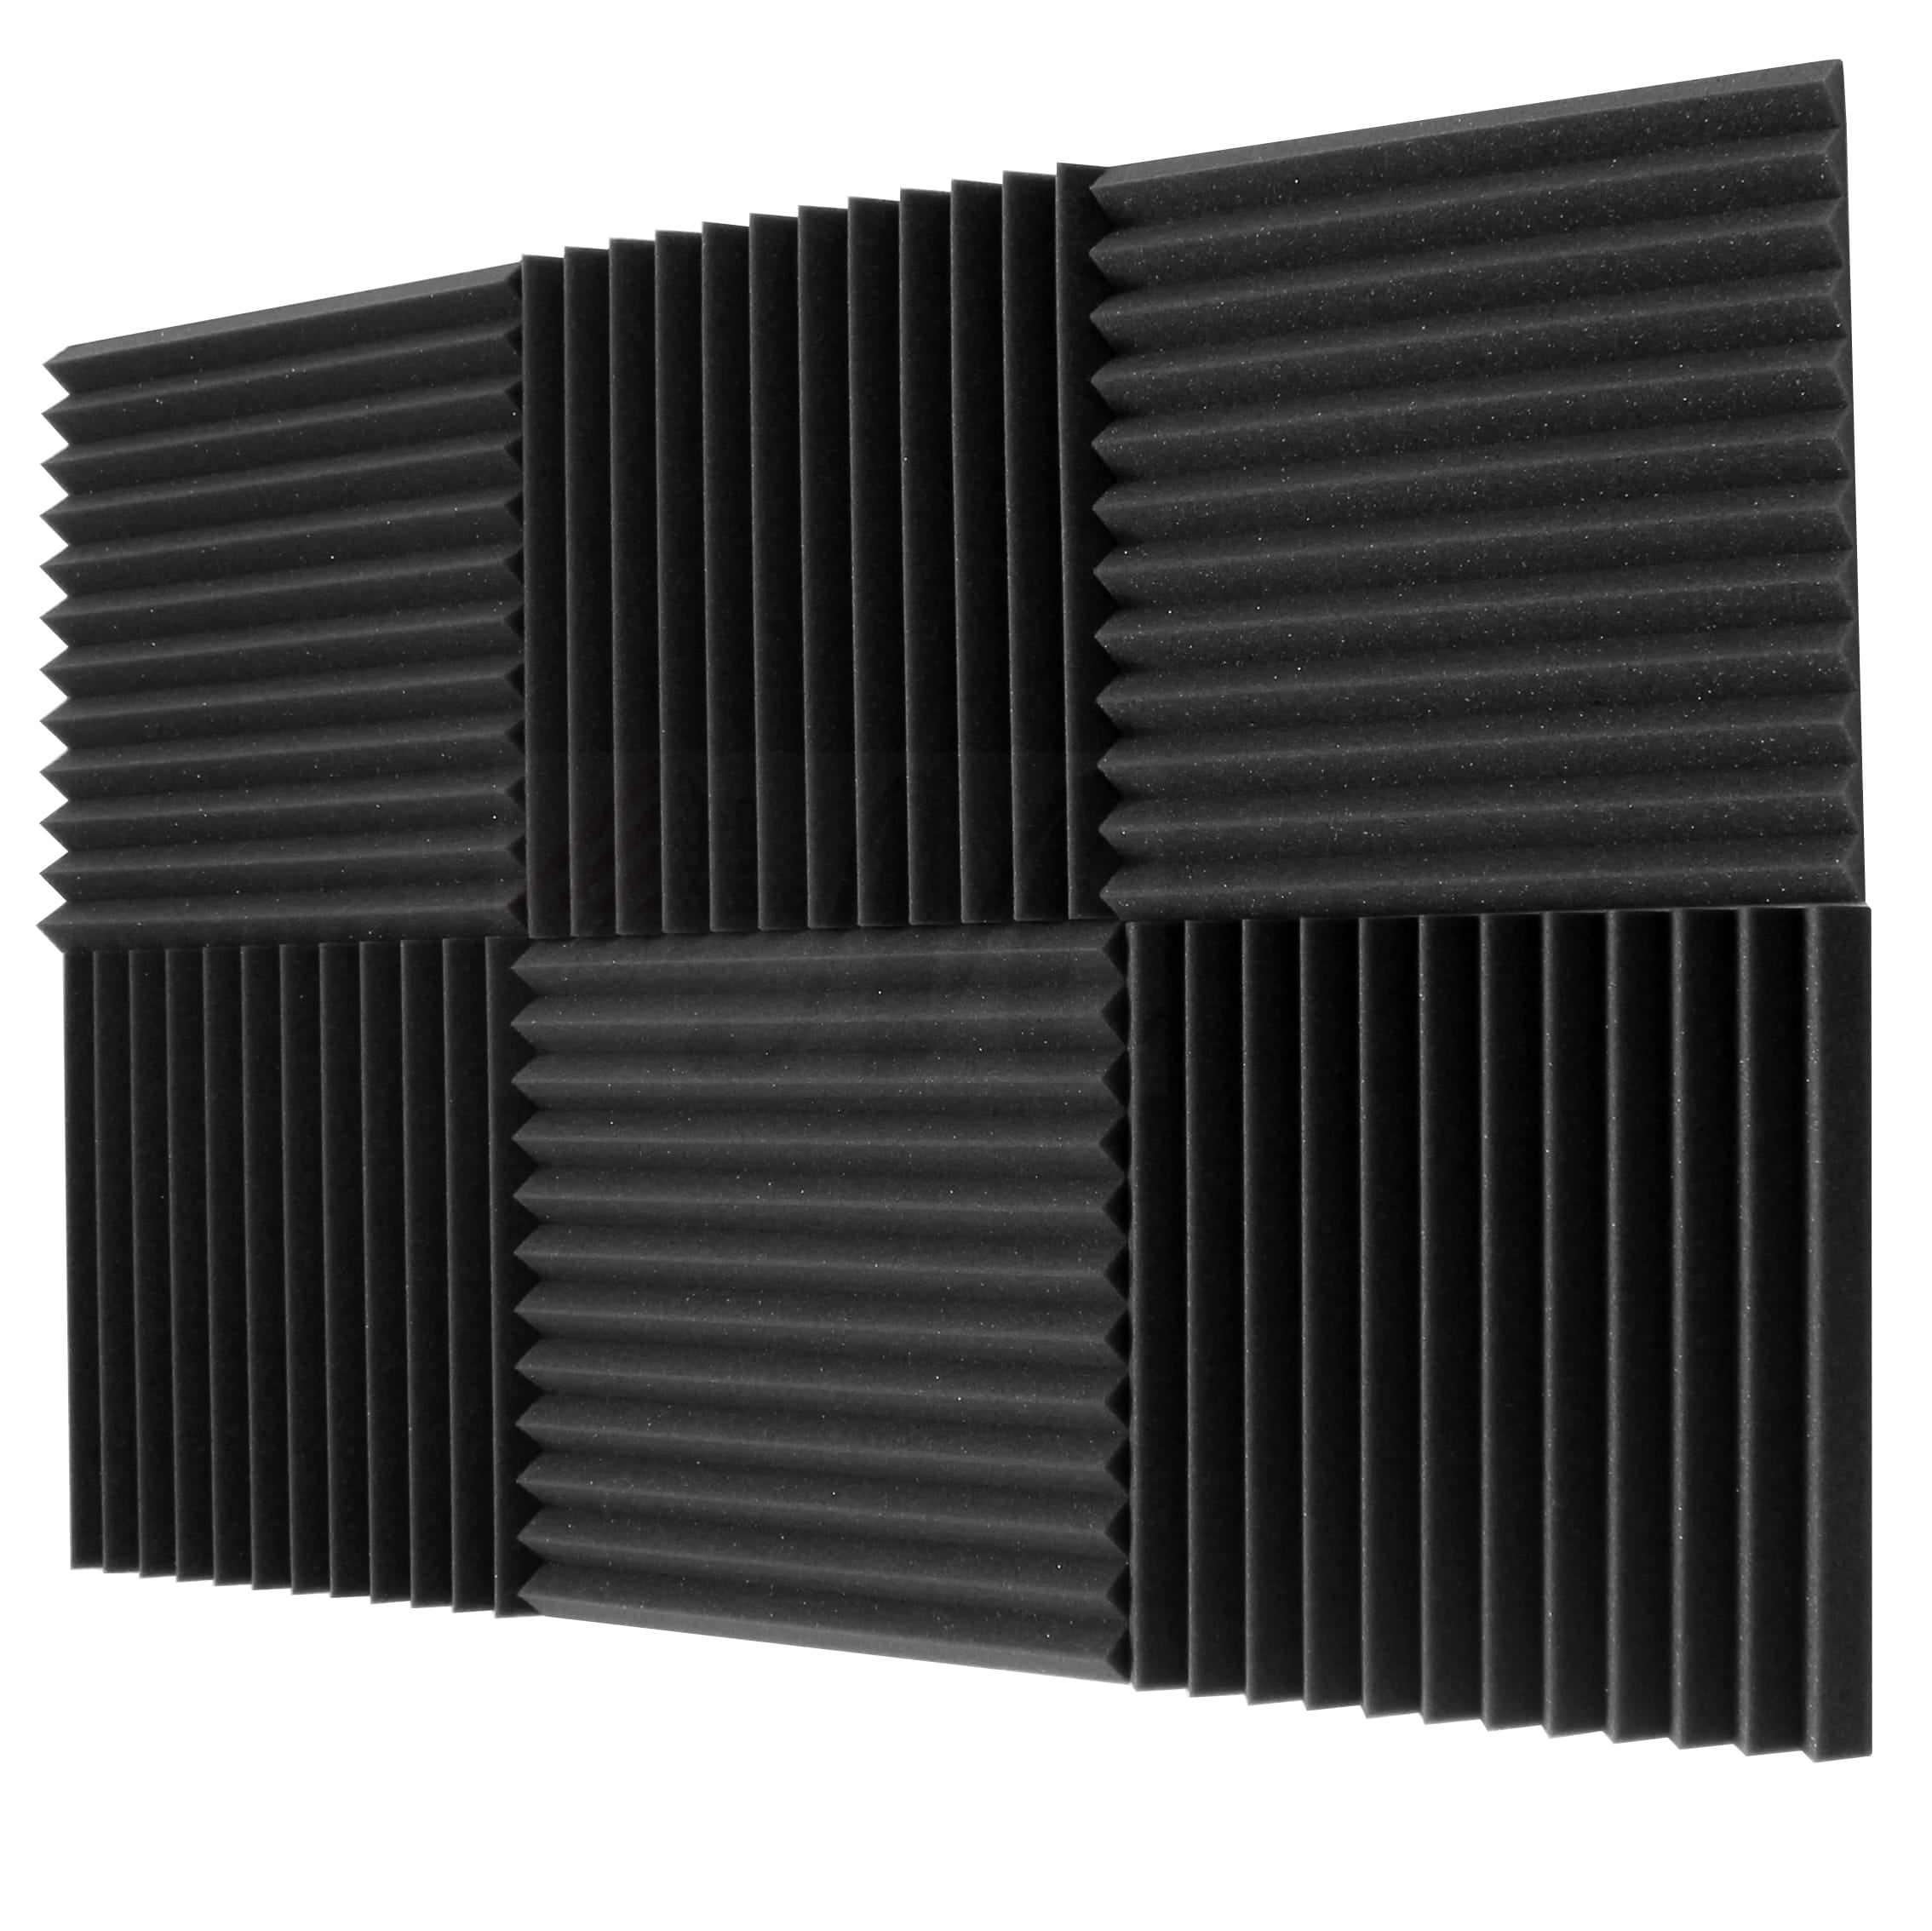 Acoustic Foam Studio Sound Absorbing Panel 12 X 12 X 2 inch Sound Reduction Panels Soundproof Foam 12 Pack